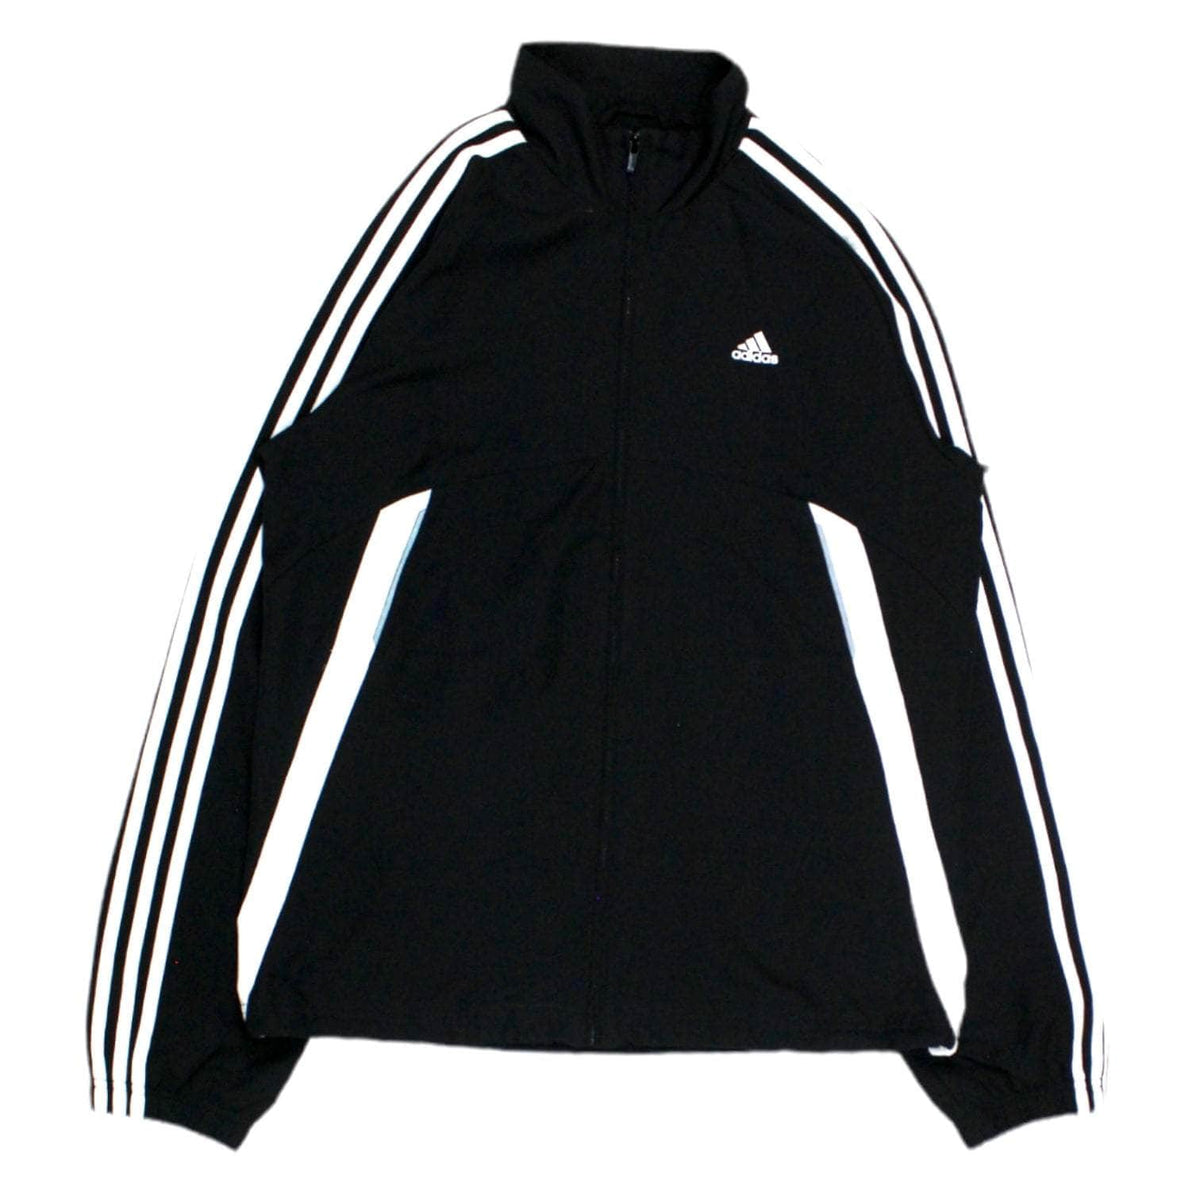 Adidas Black Lined Sports Jacket